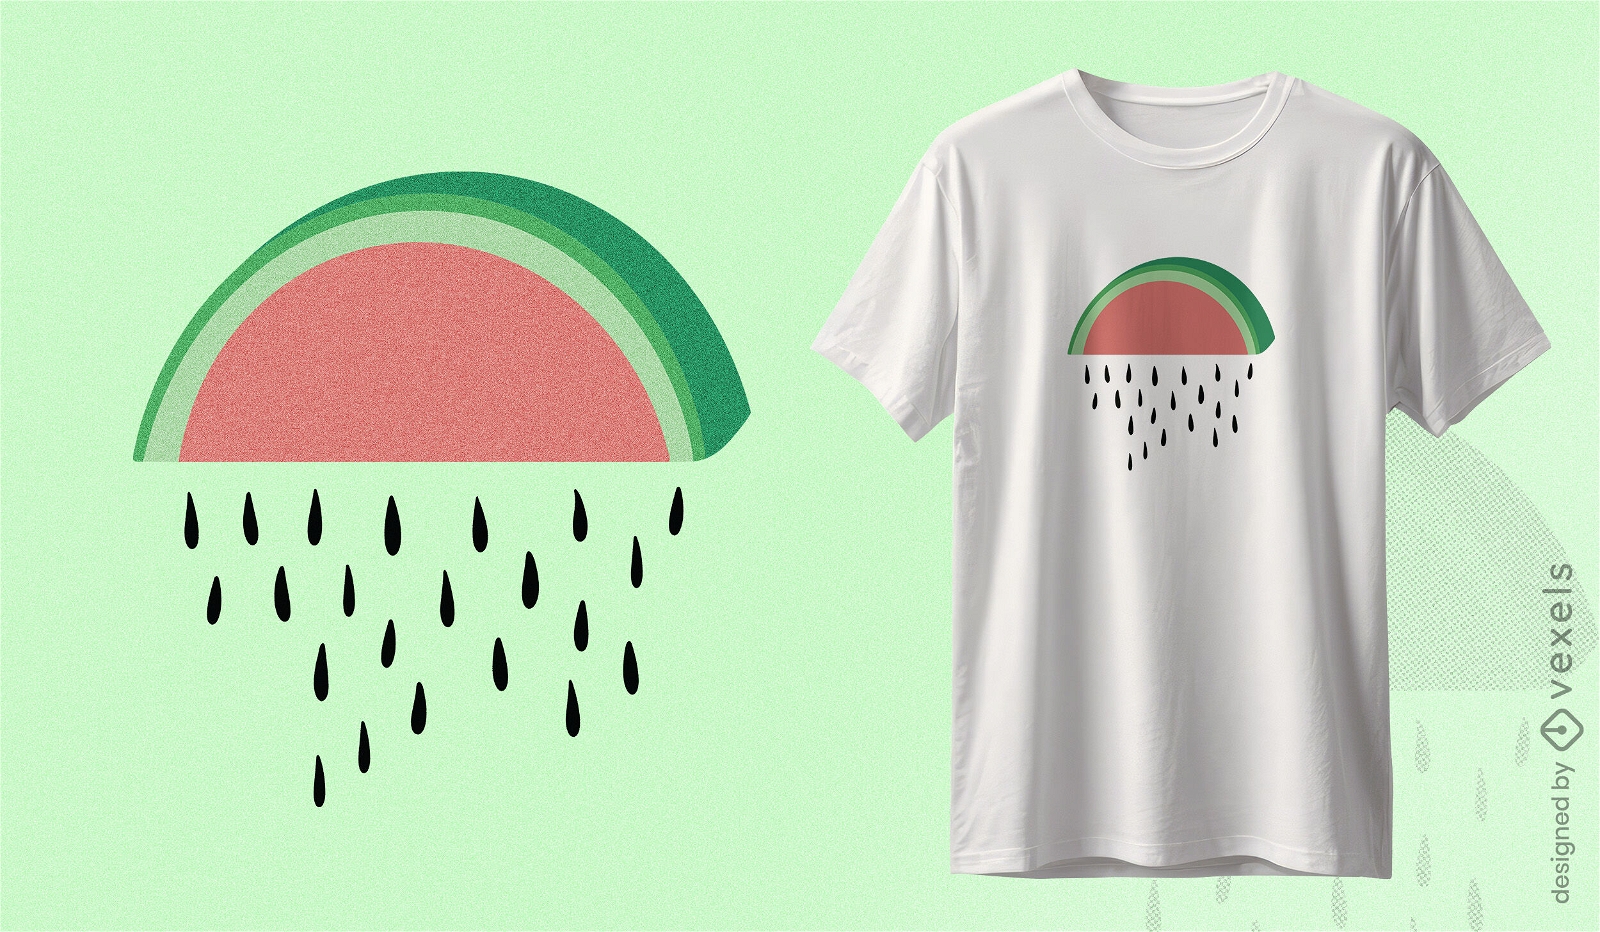 Watermelon rain cloud t-shirt design